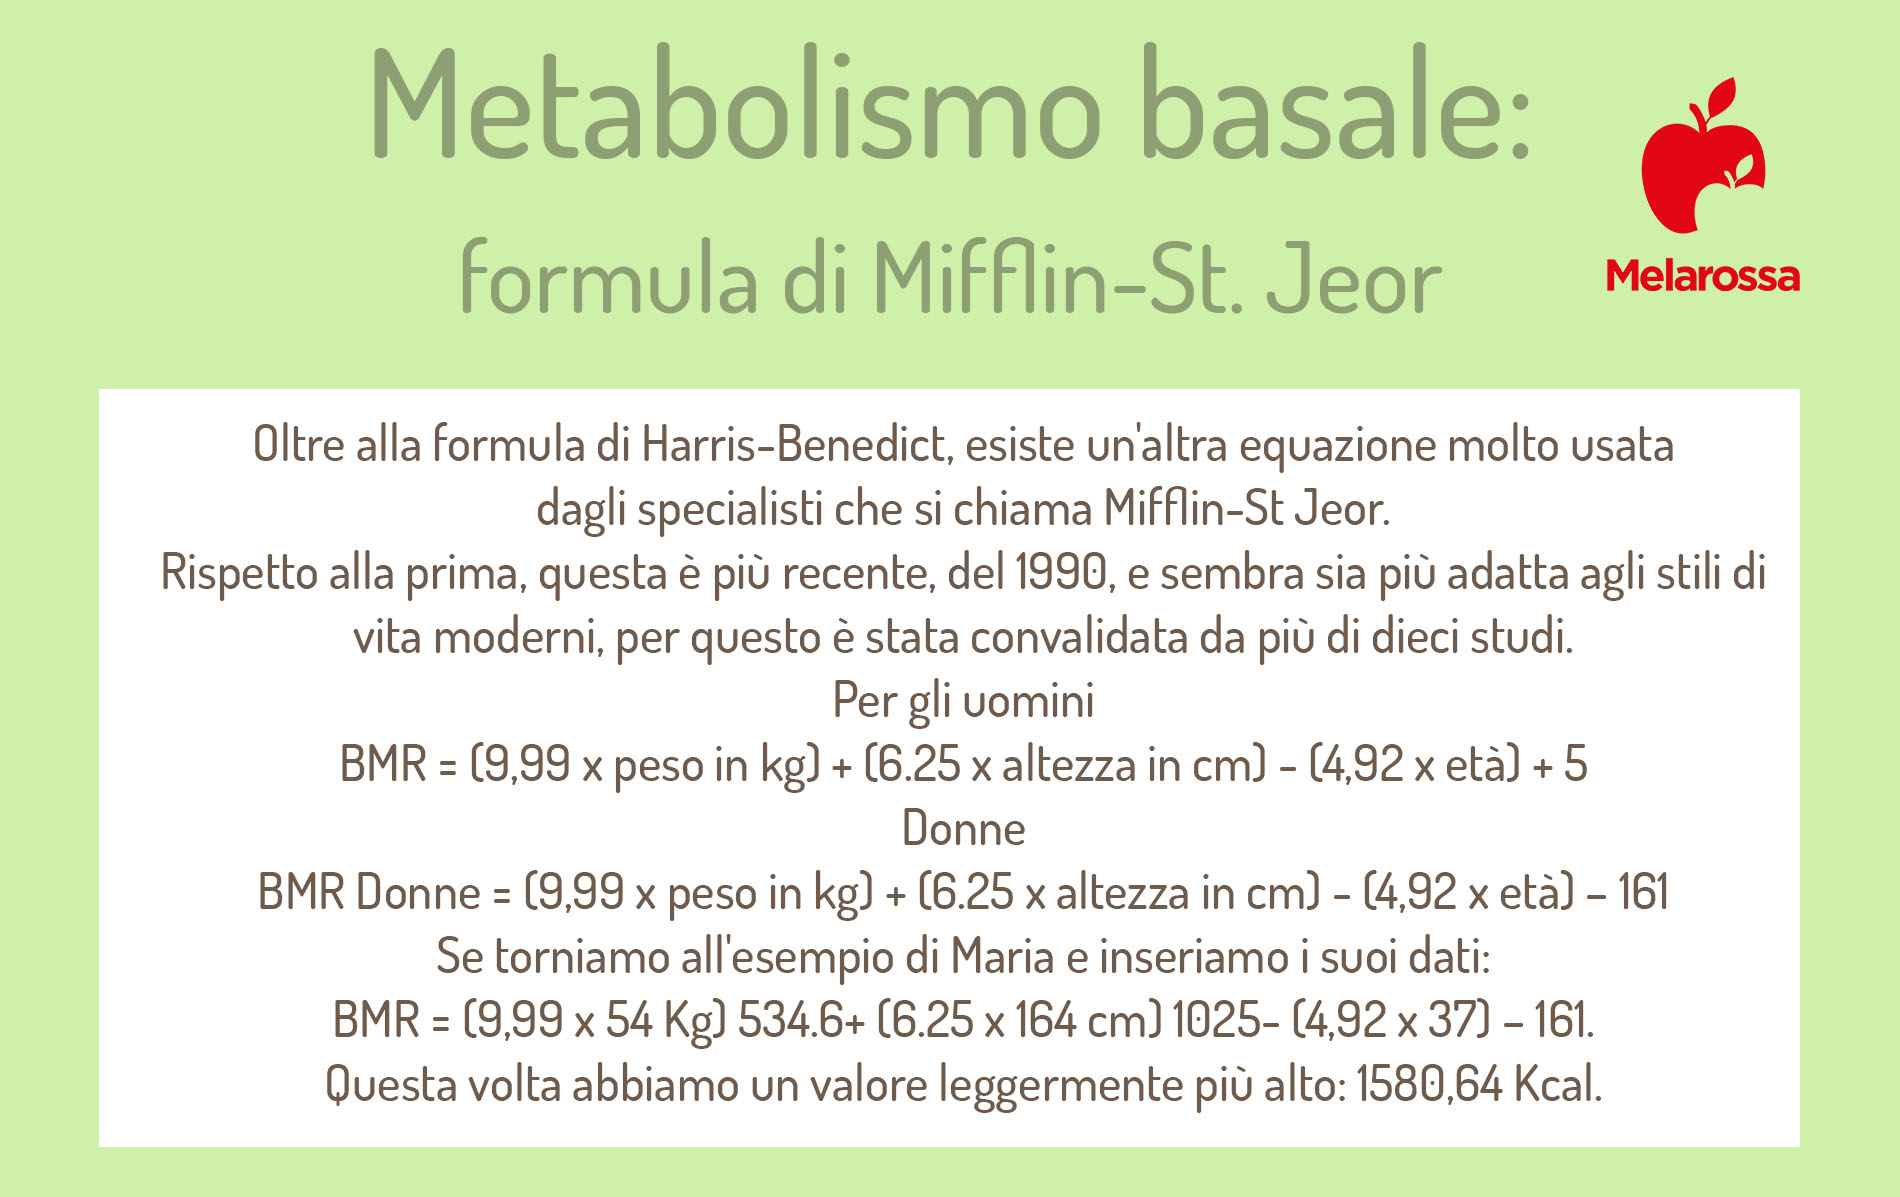 metabolismo basale: formula di Miffin